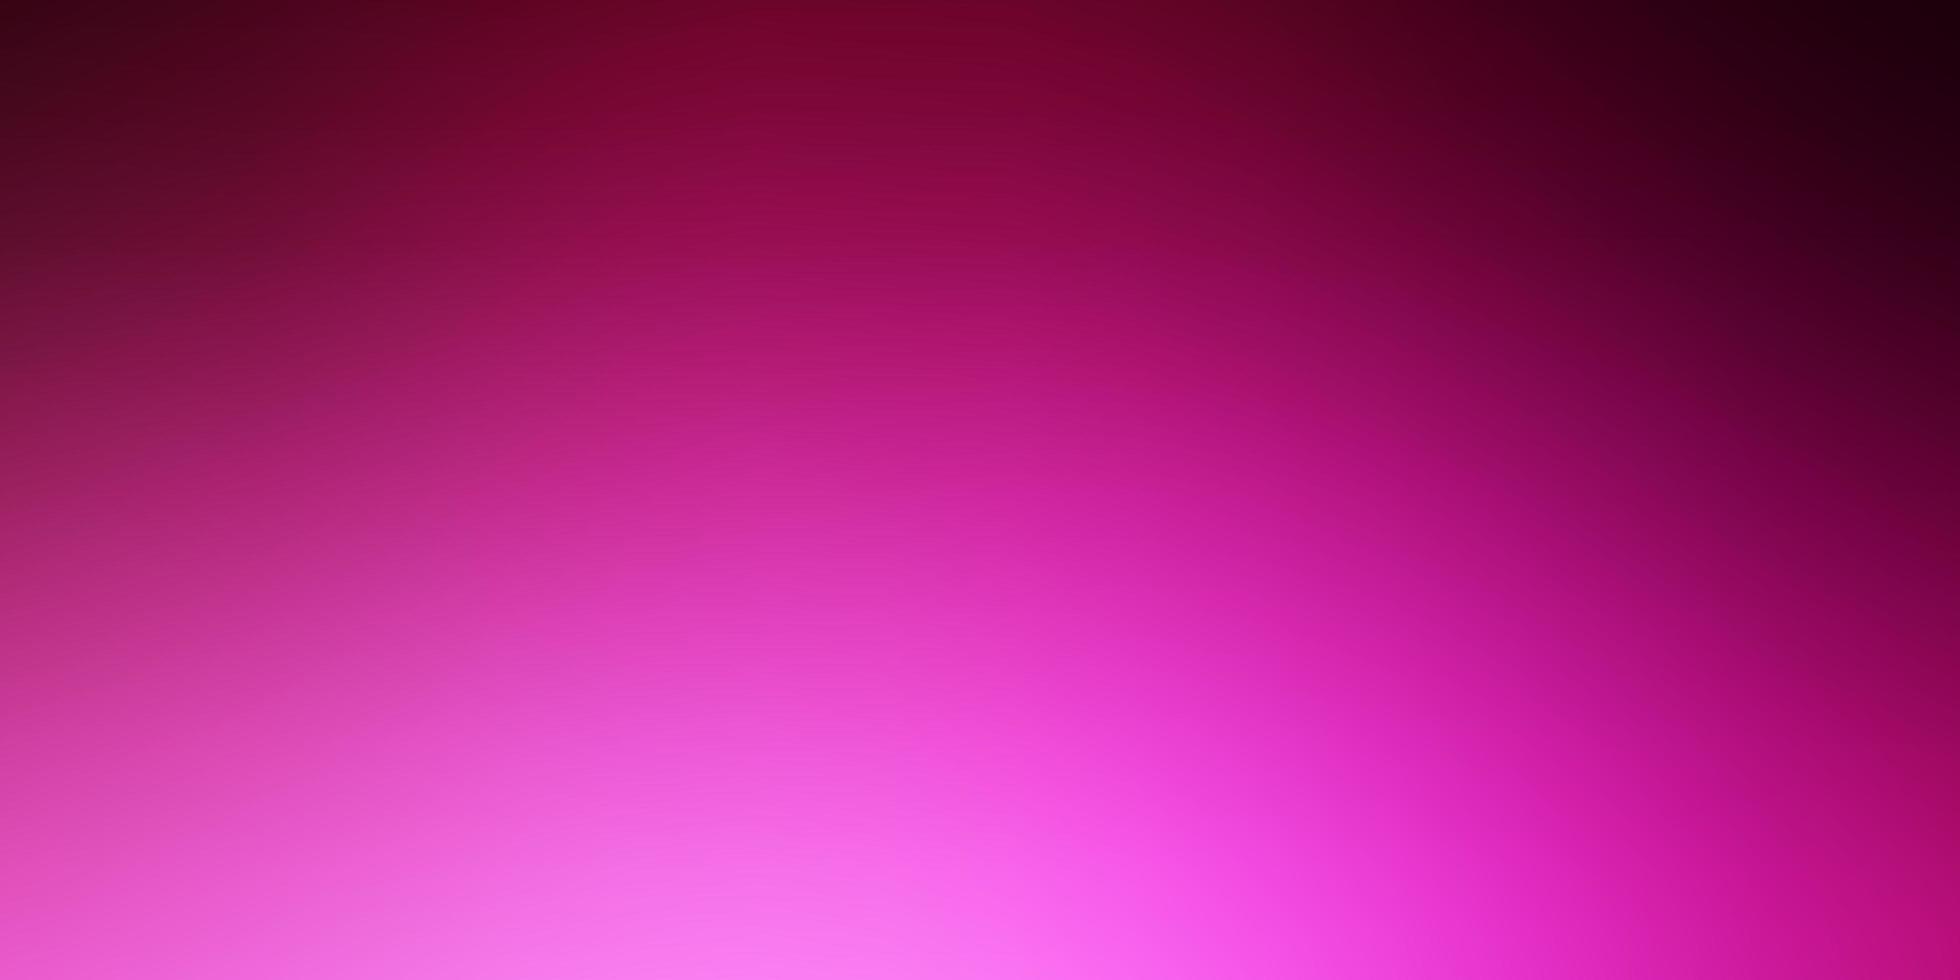 Light Pink vector modern blurred backdrop.